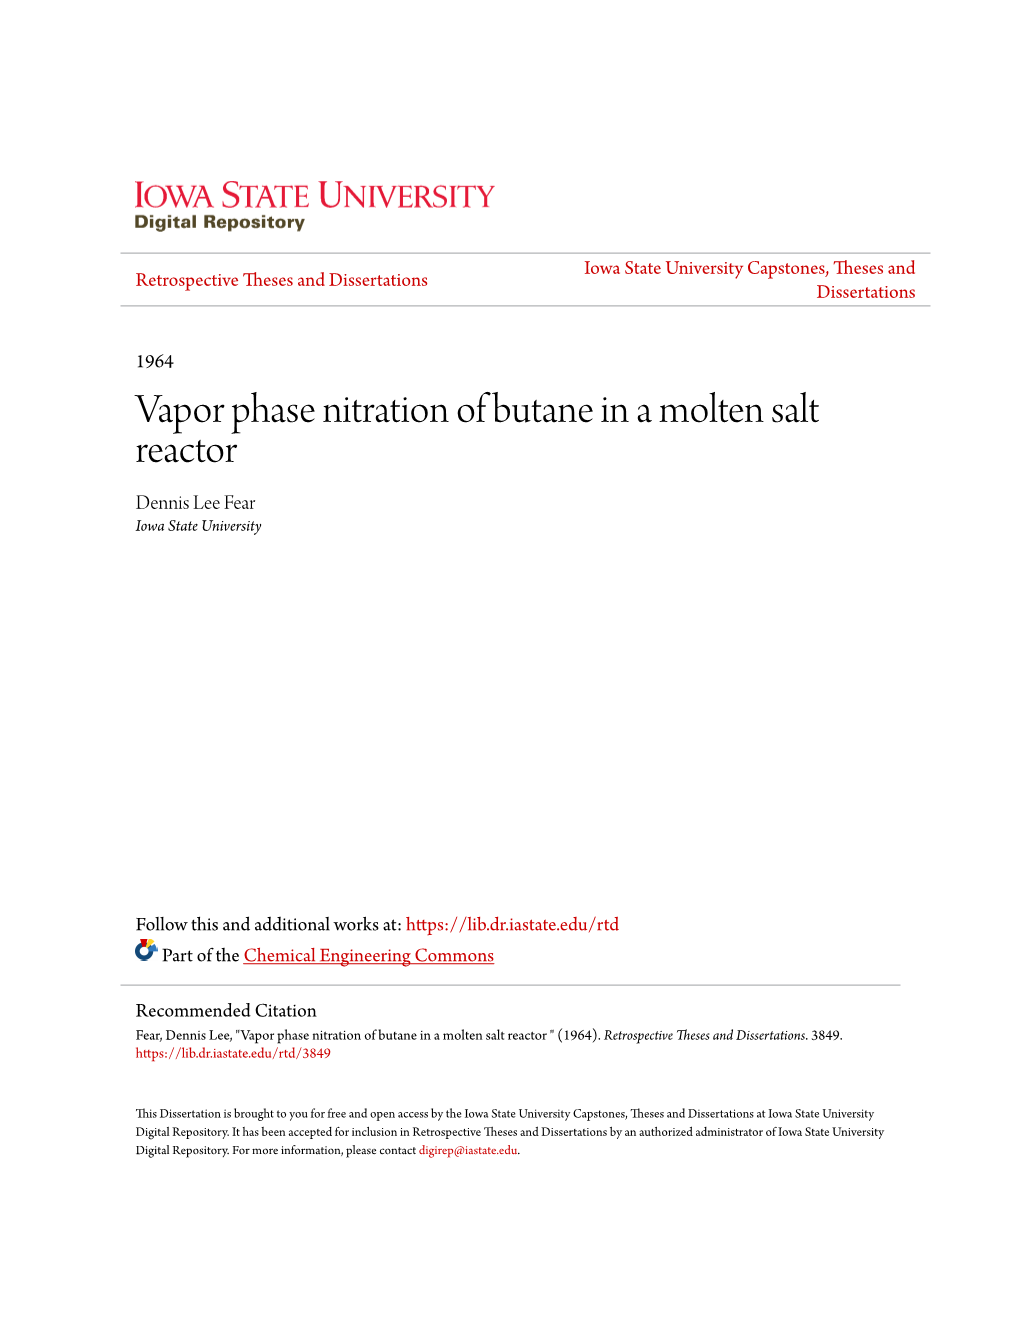 Vapor Phase Nitration of Butane in a Molten Salt Reactor Dennis Lee Fear Iowa State University